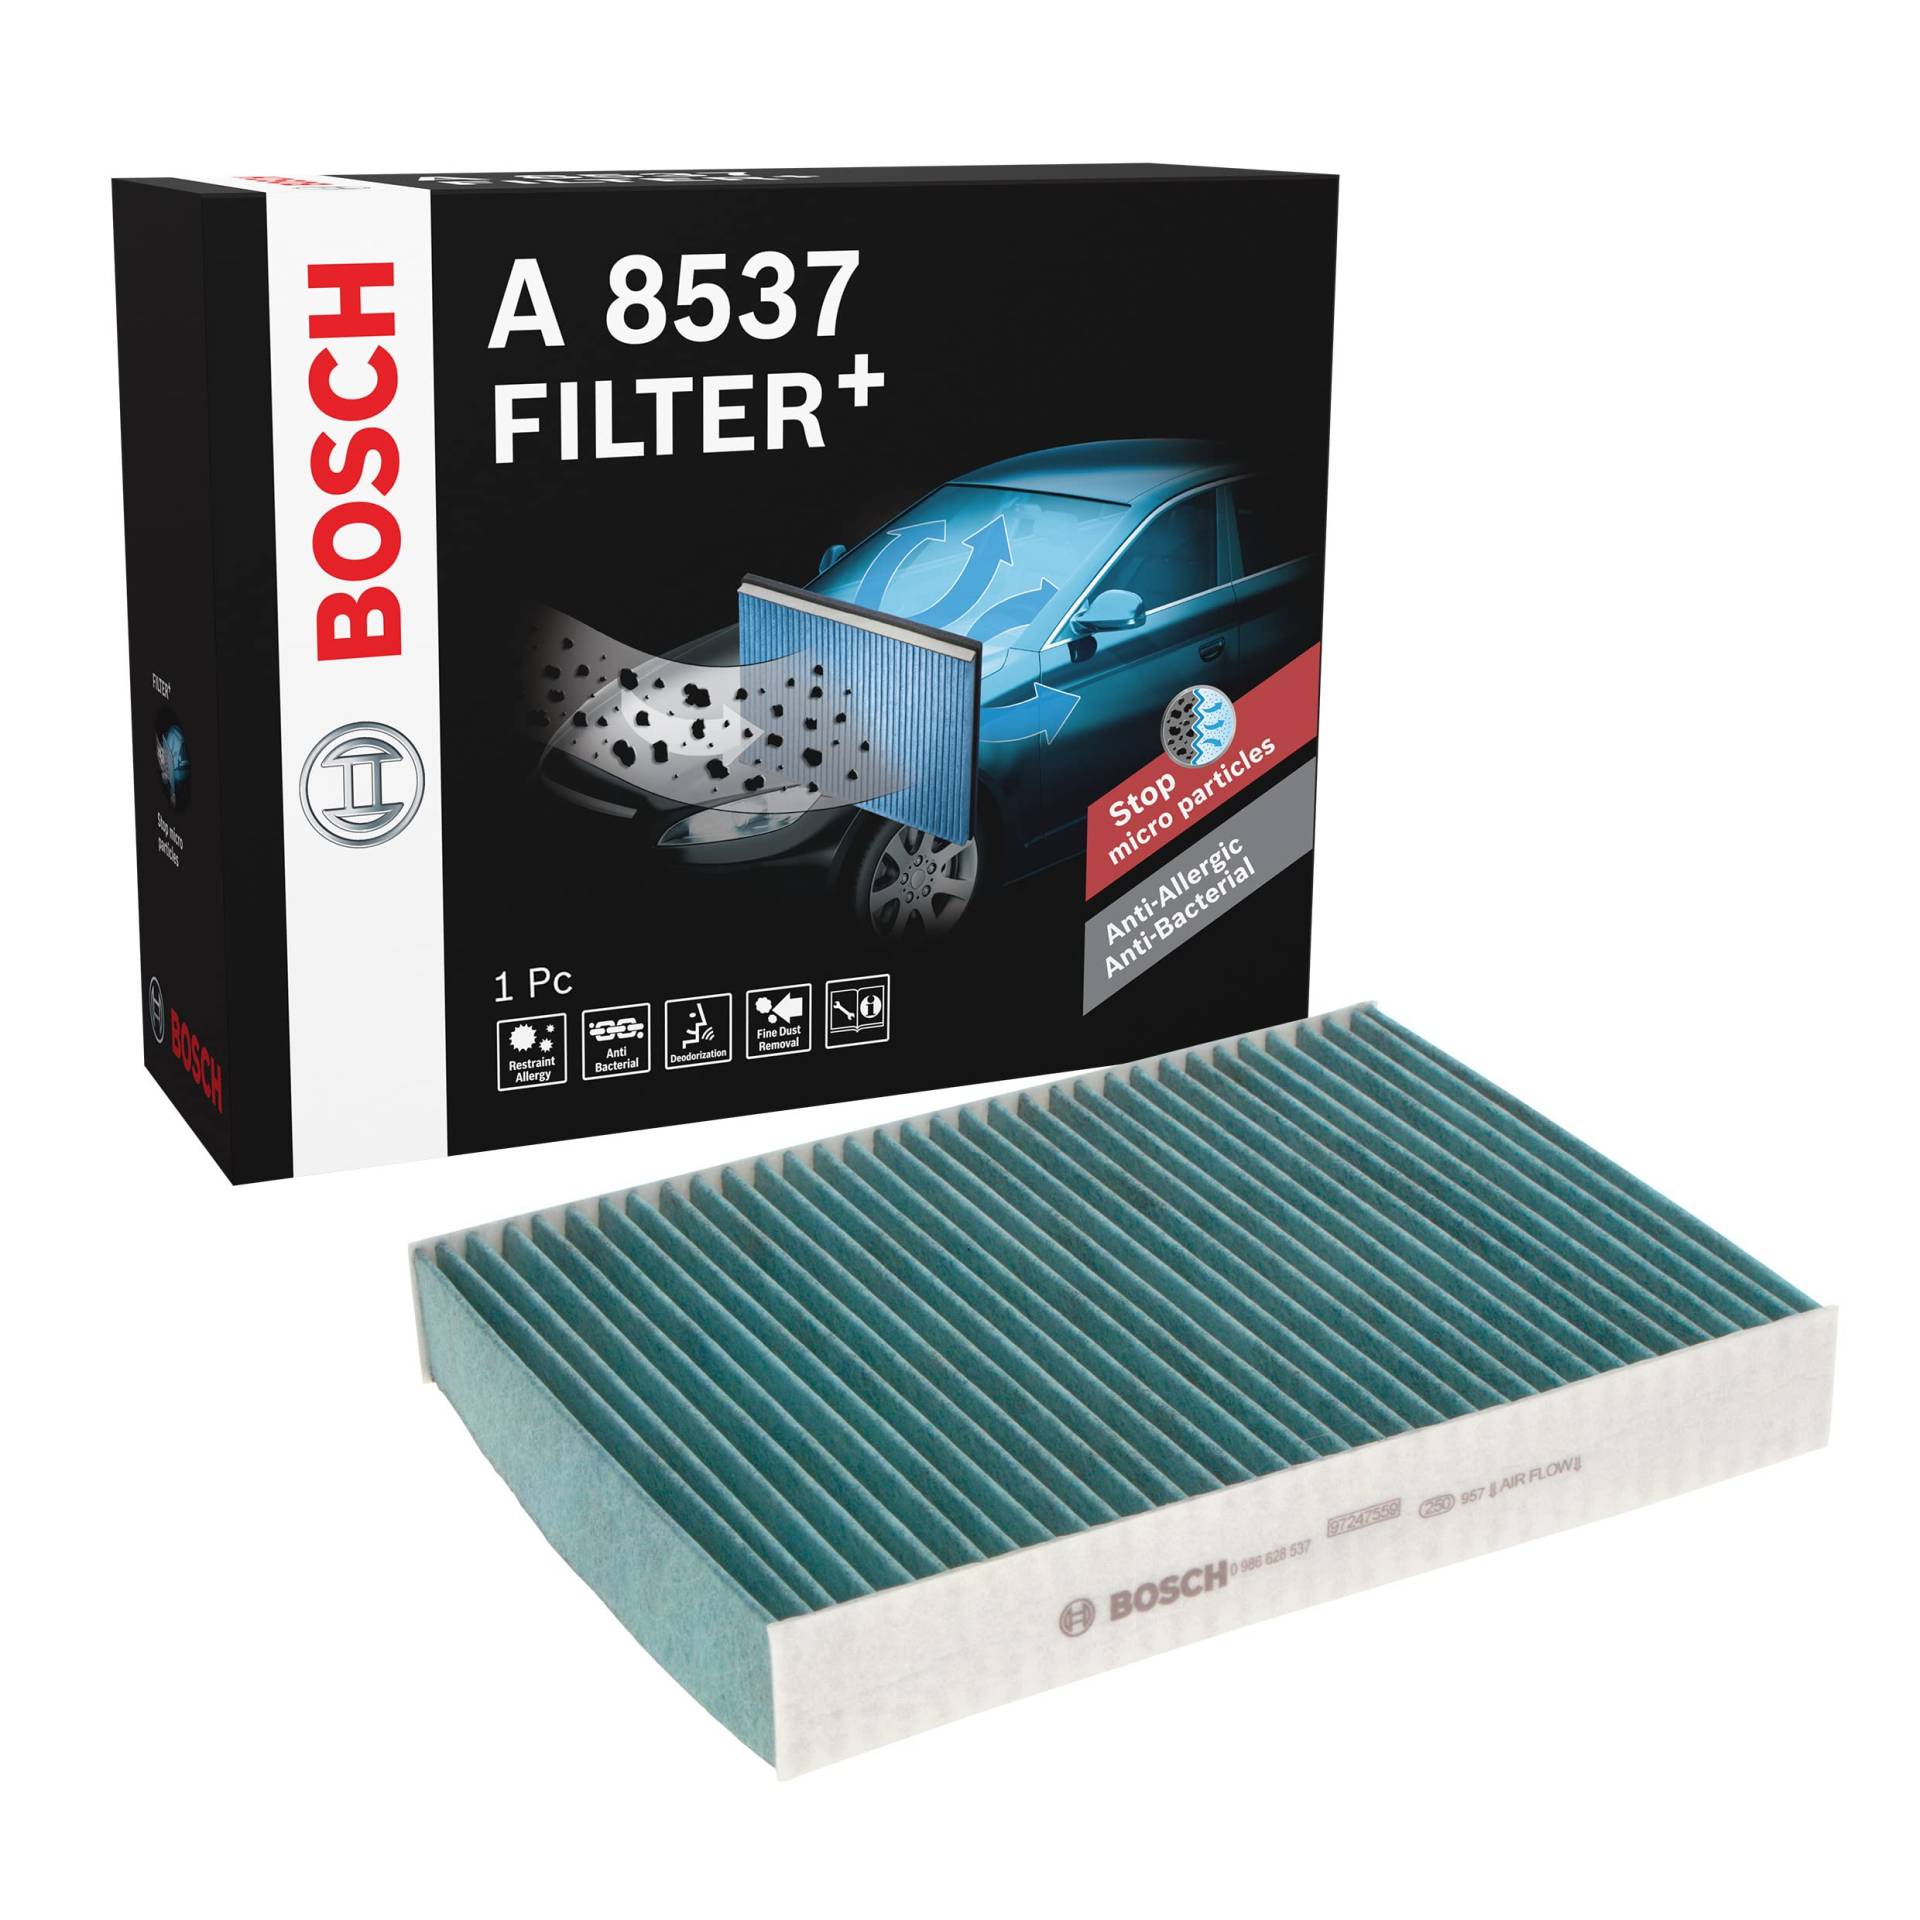 Bosch A8537 - Innenraumfilter Filter+ von Bosch Automotive